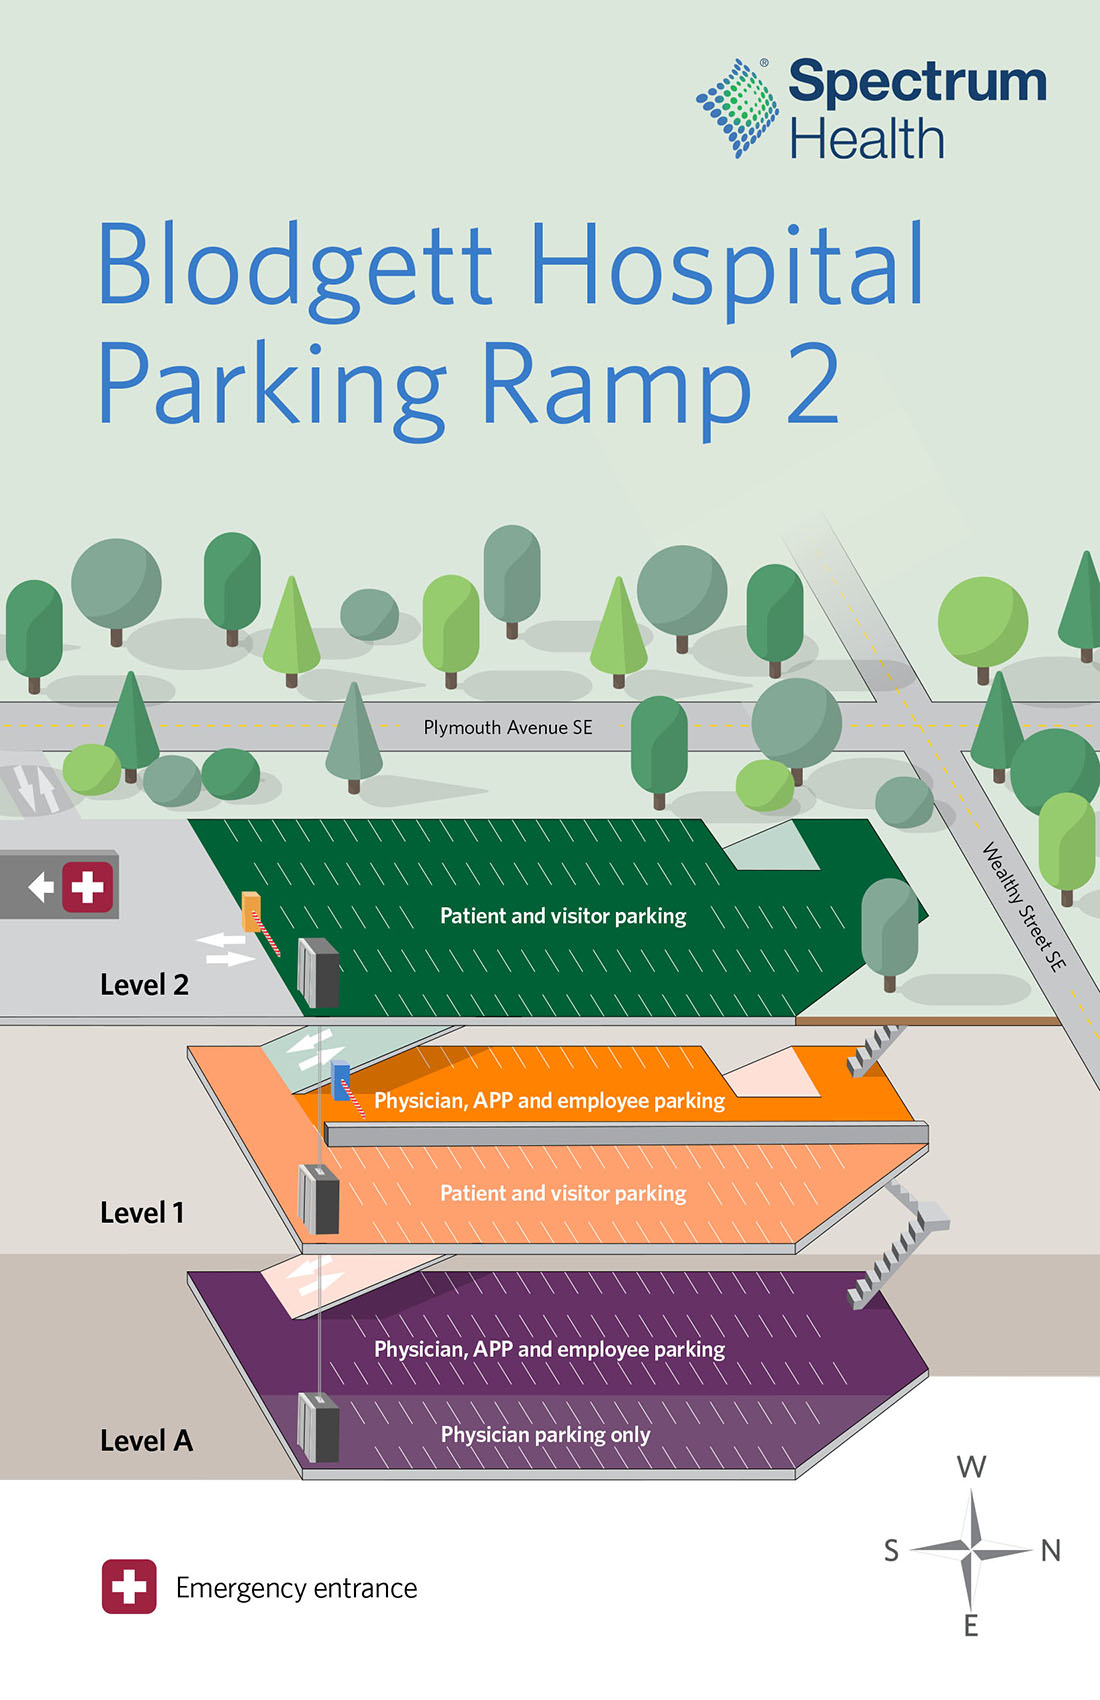 Overall parking setup diagram.